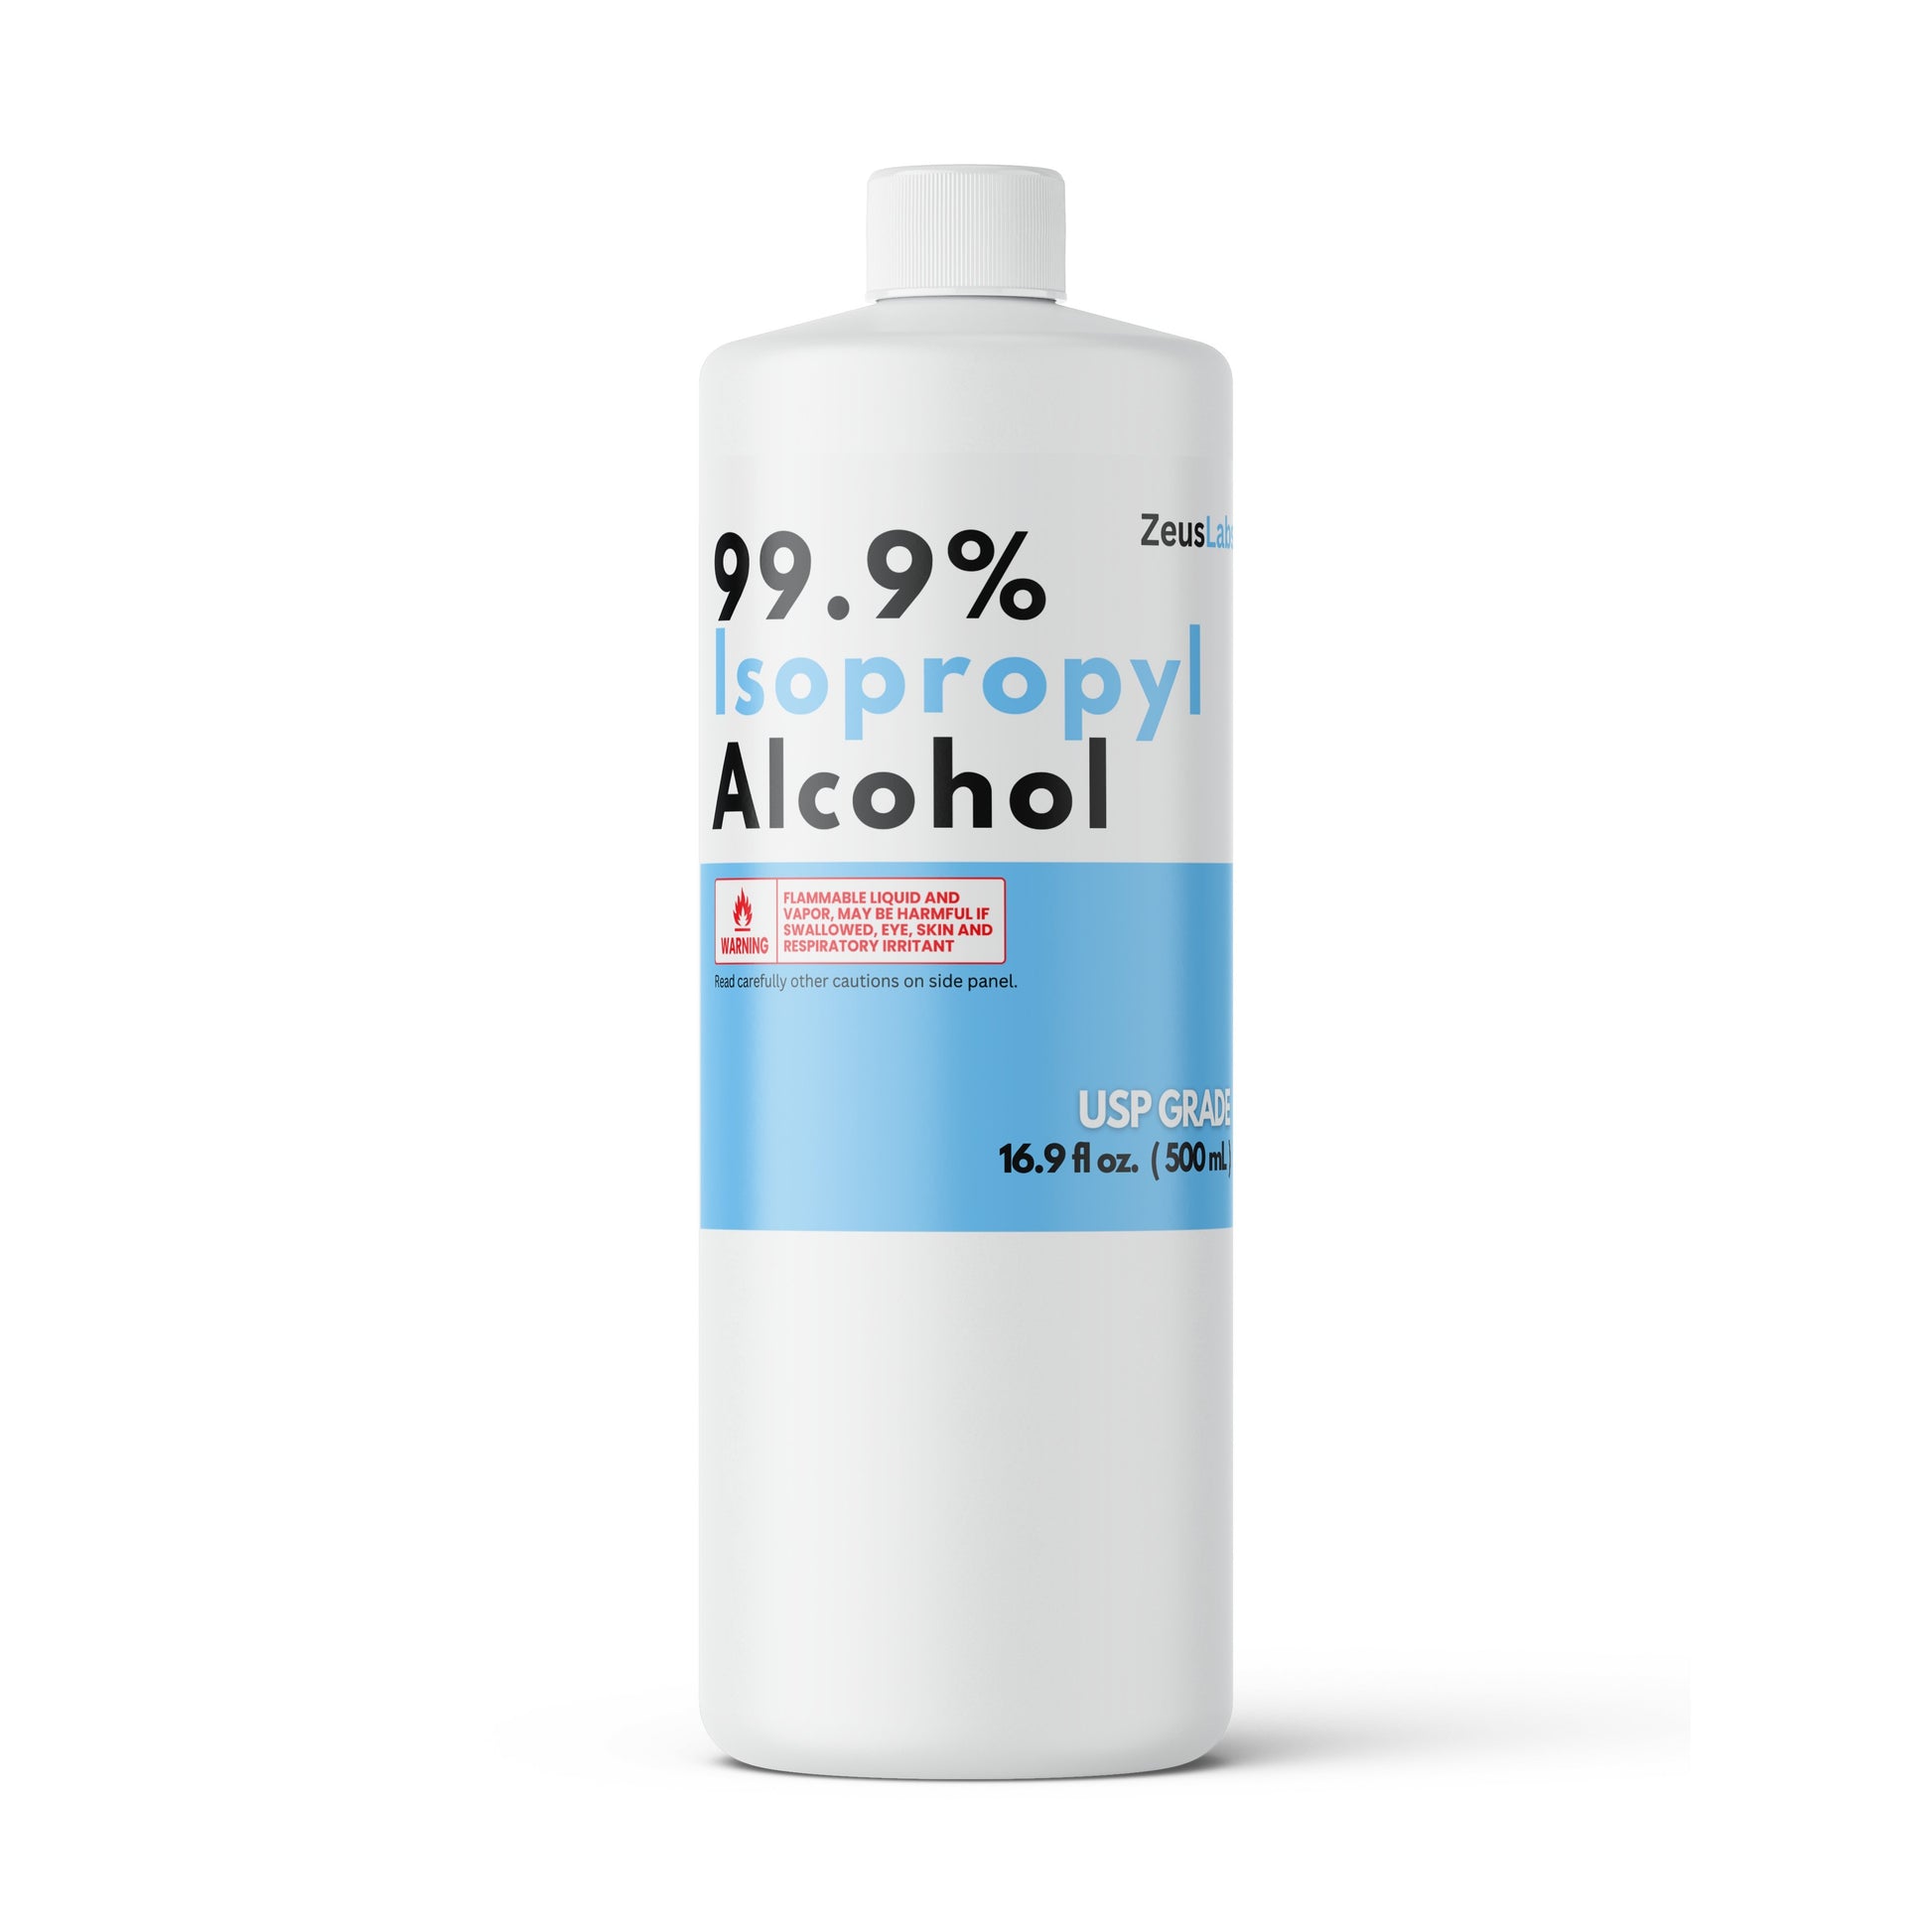 99.9% Isopropyl Alcohol